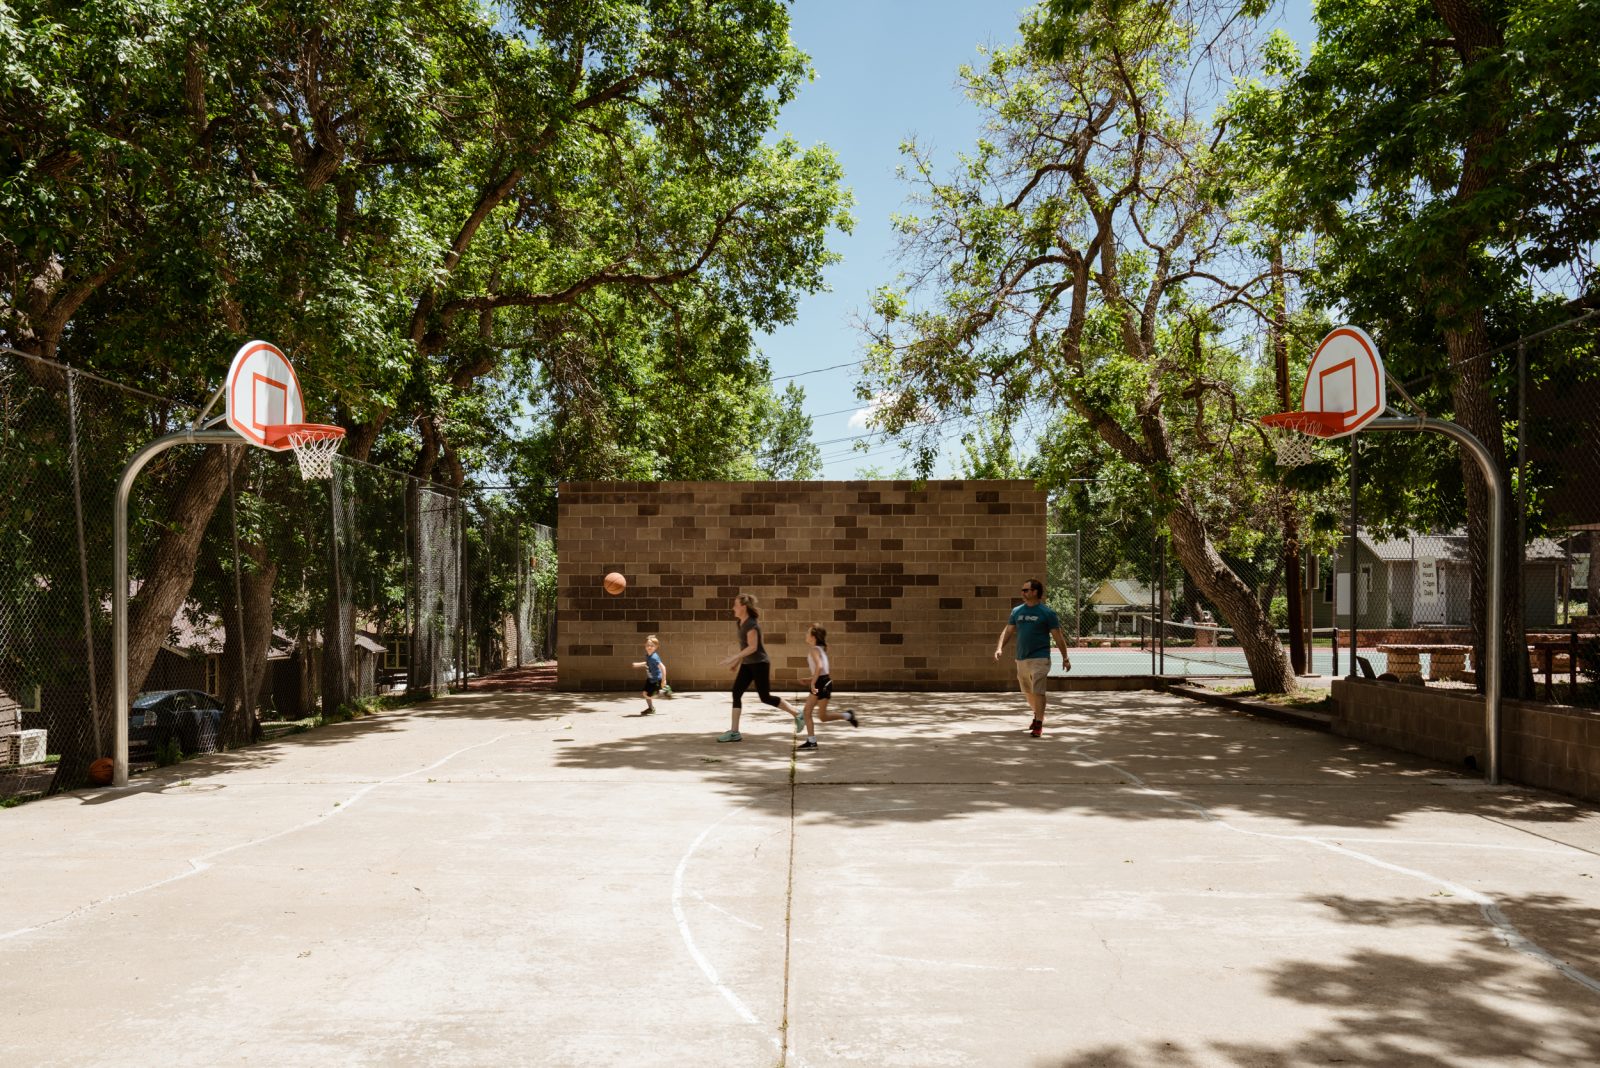 Children playing basketball